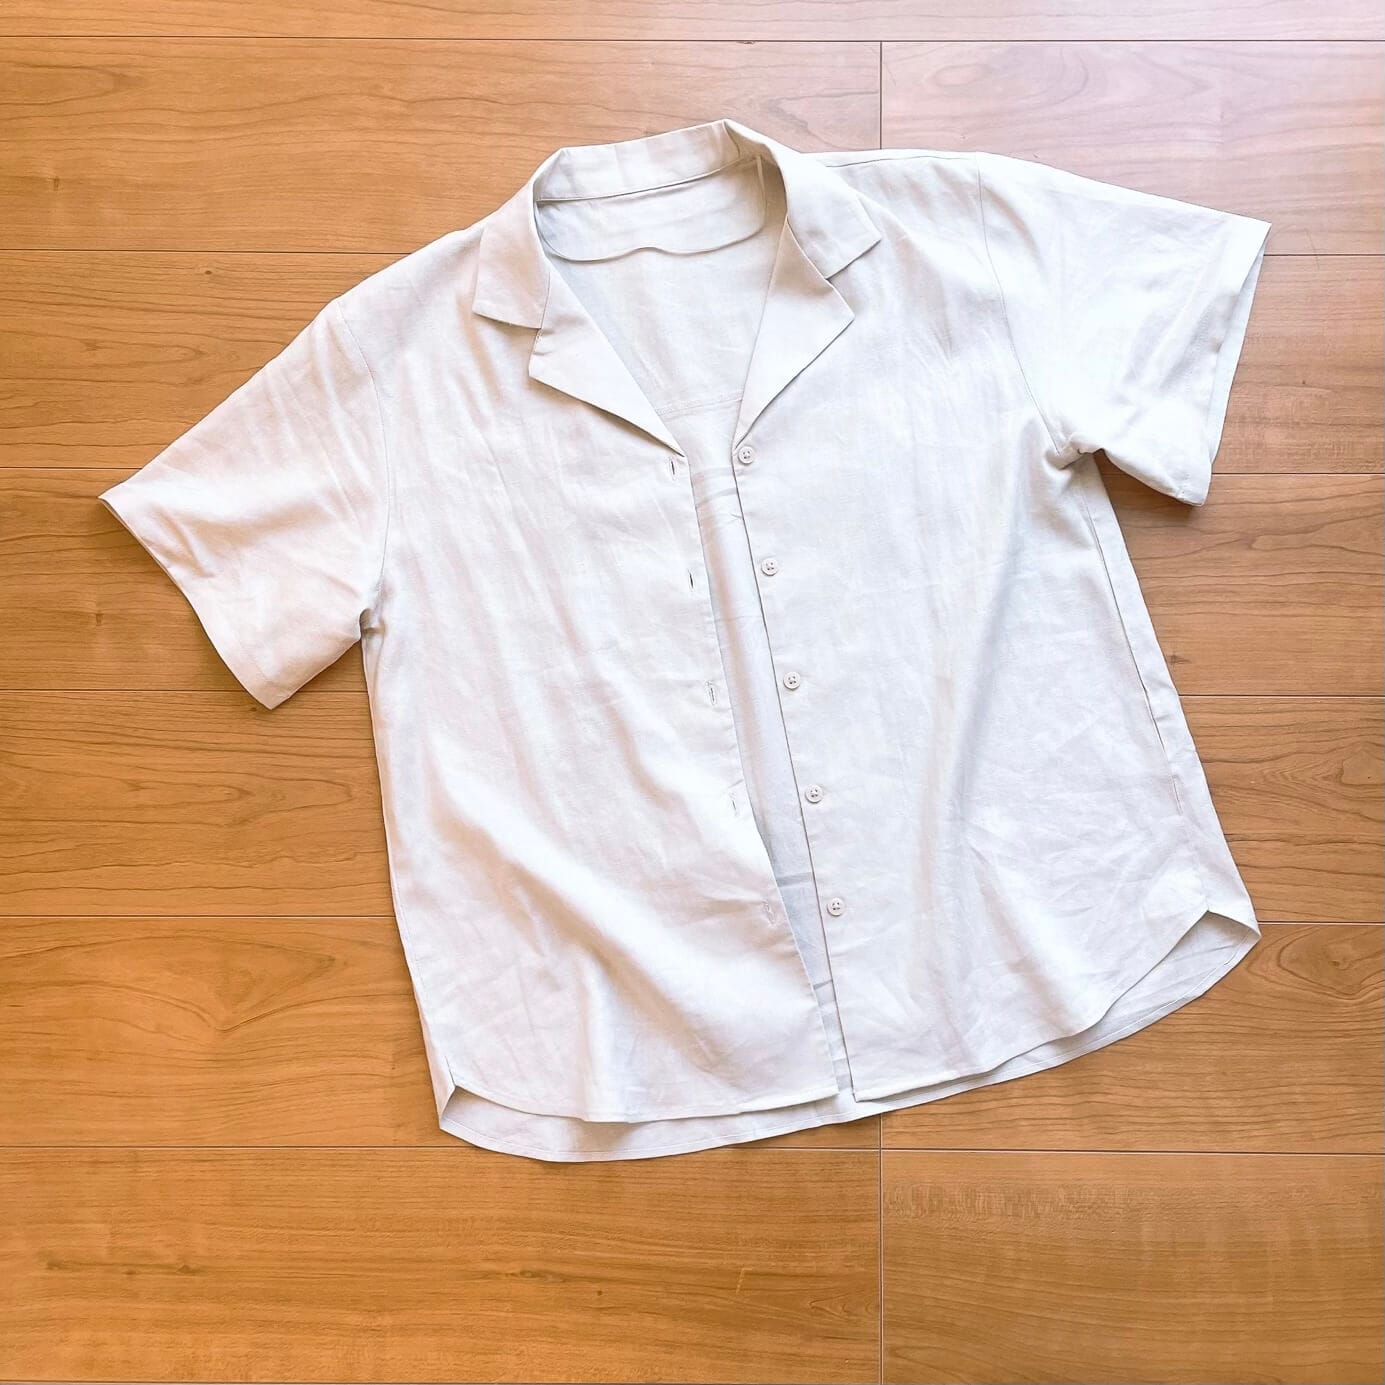 GU】リネンブレンドシャツが夏の体型カバーにお役立ち LEE